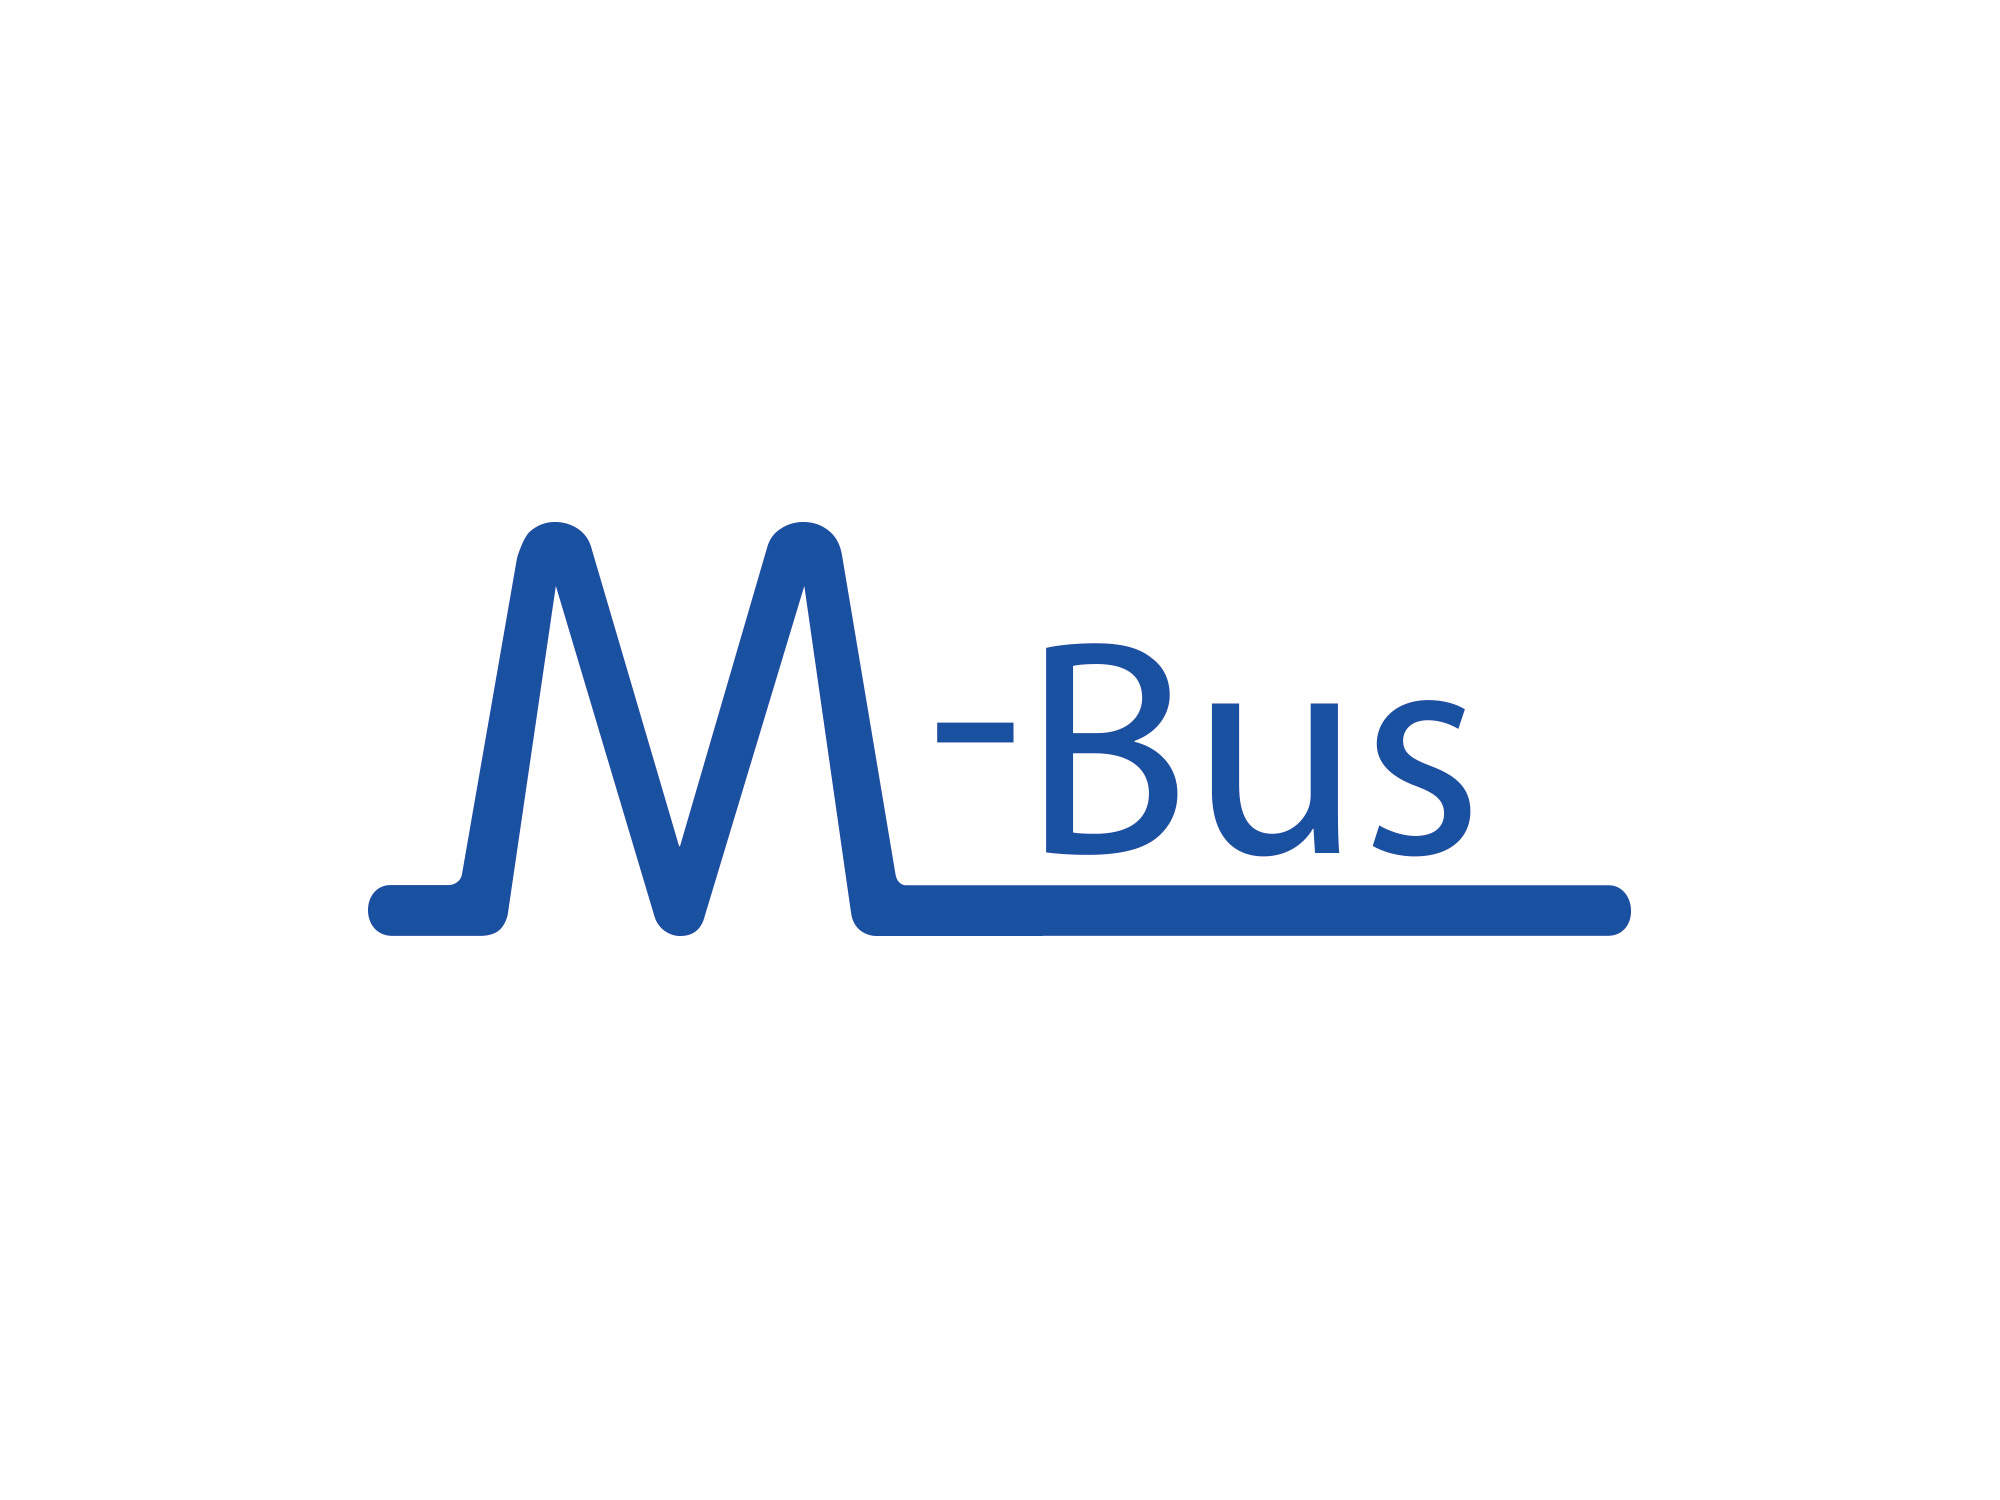 logo_m-bus_2000x1500.jpg